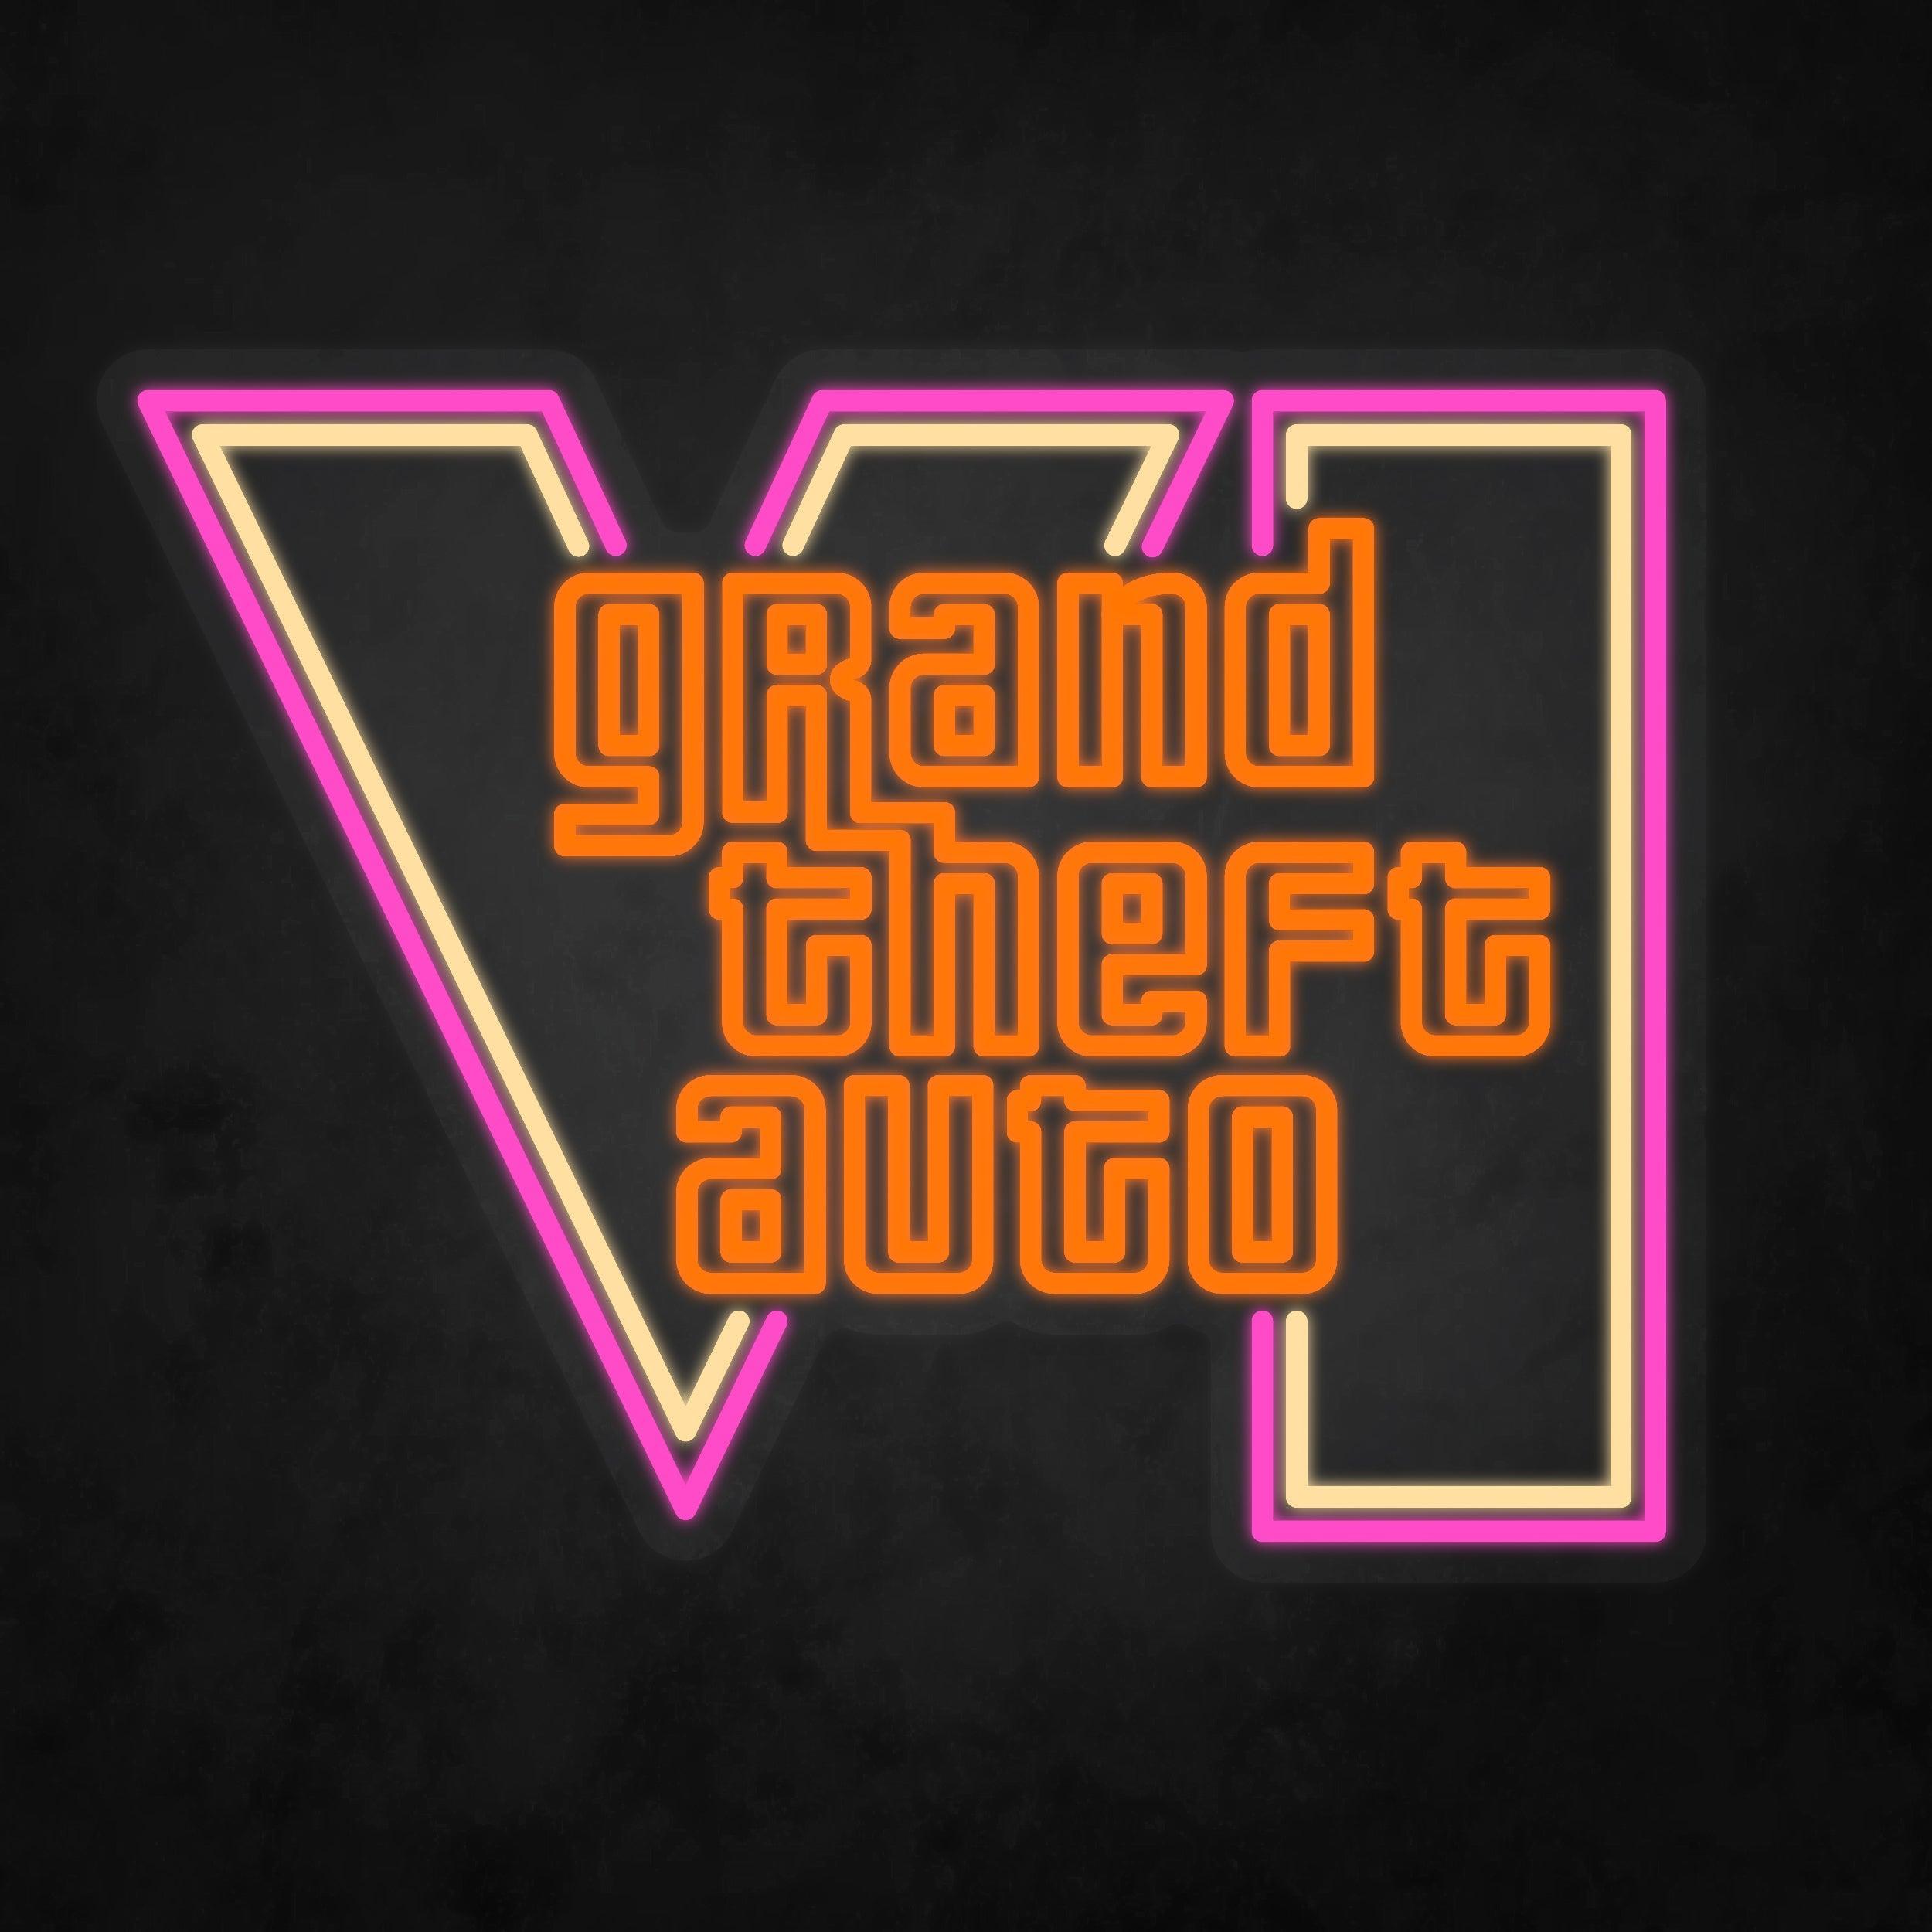 LED Neon Sign - Grand Theft Auto - GTA 6 - Neonbir